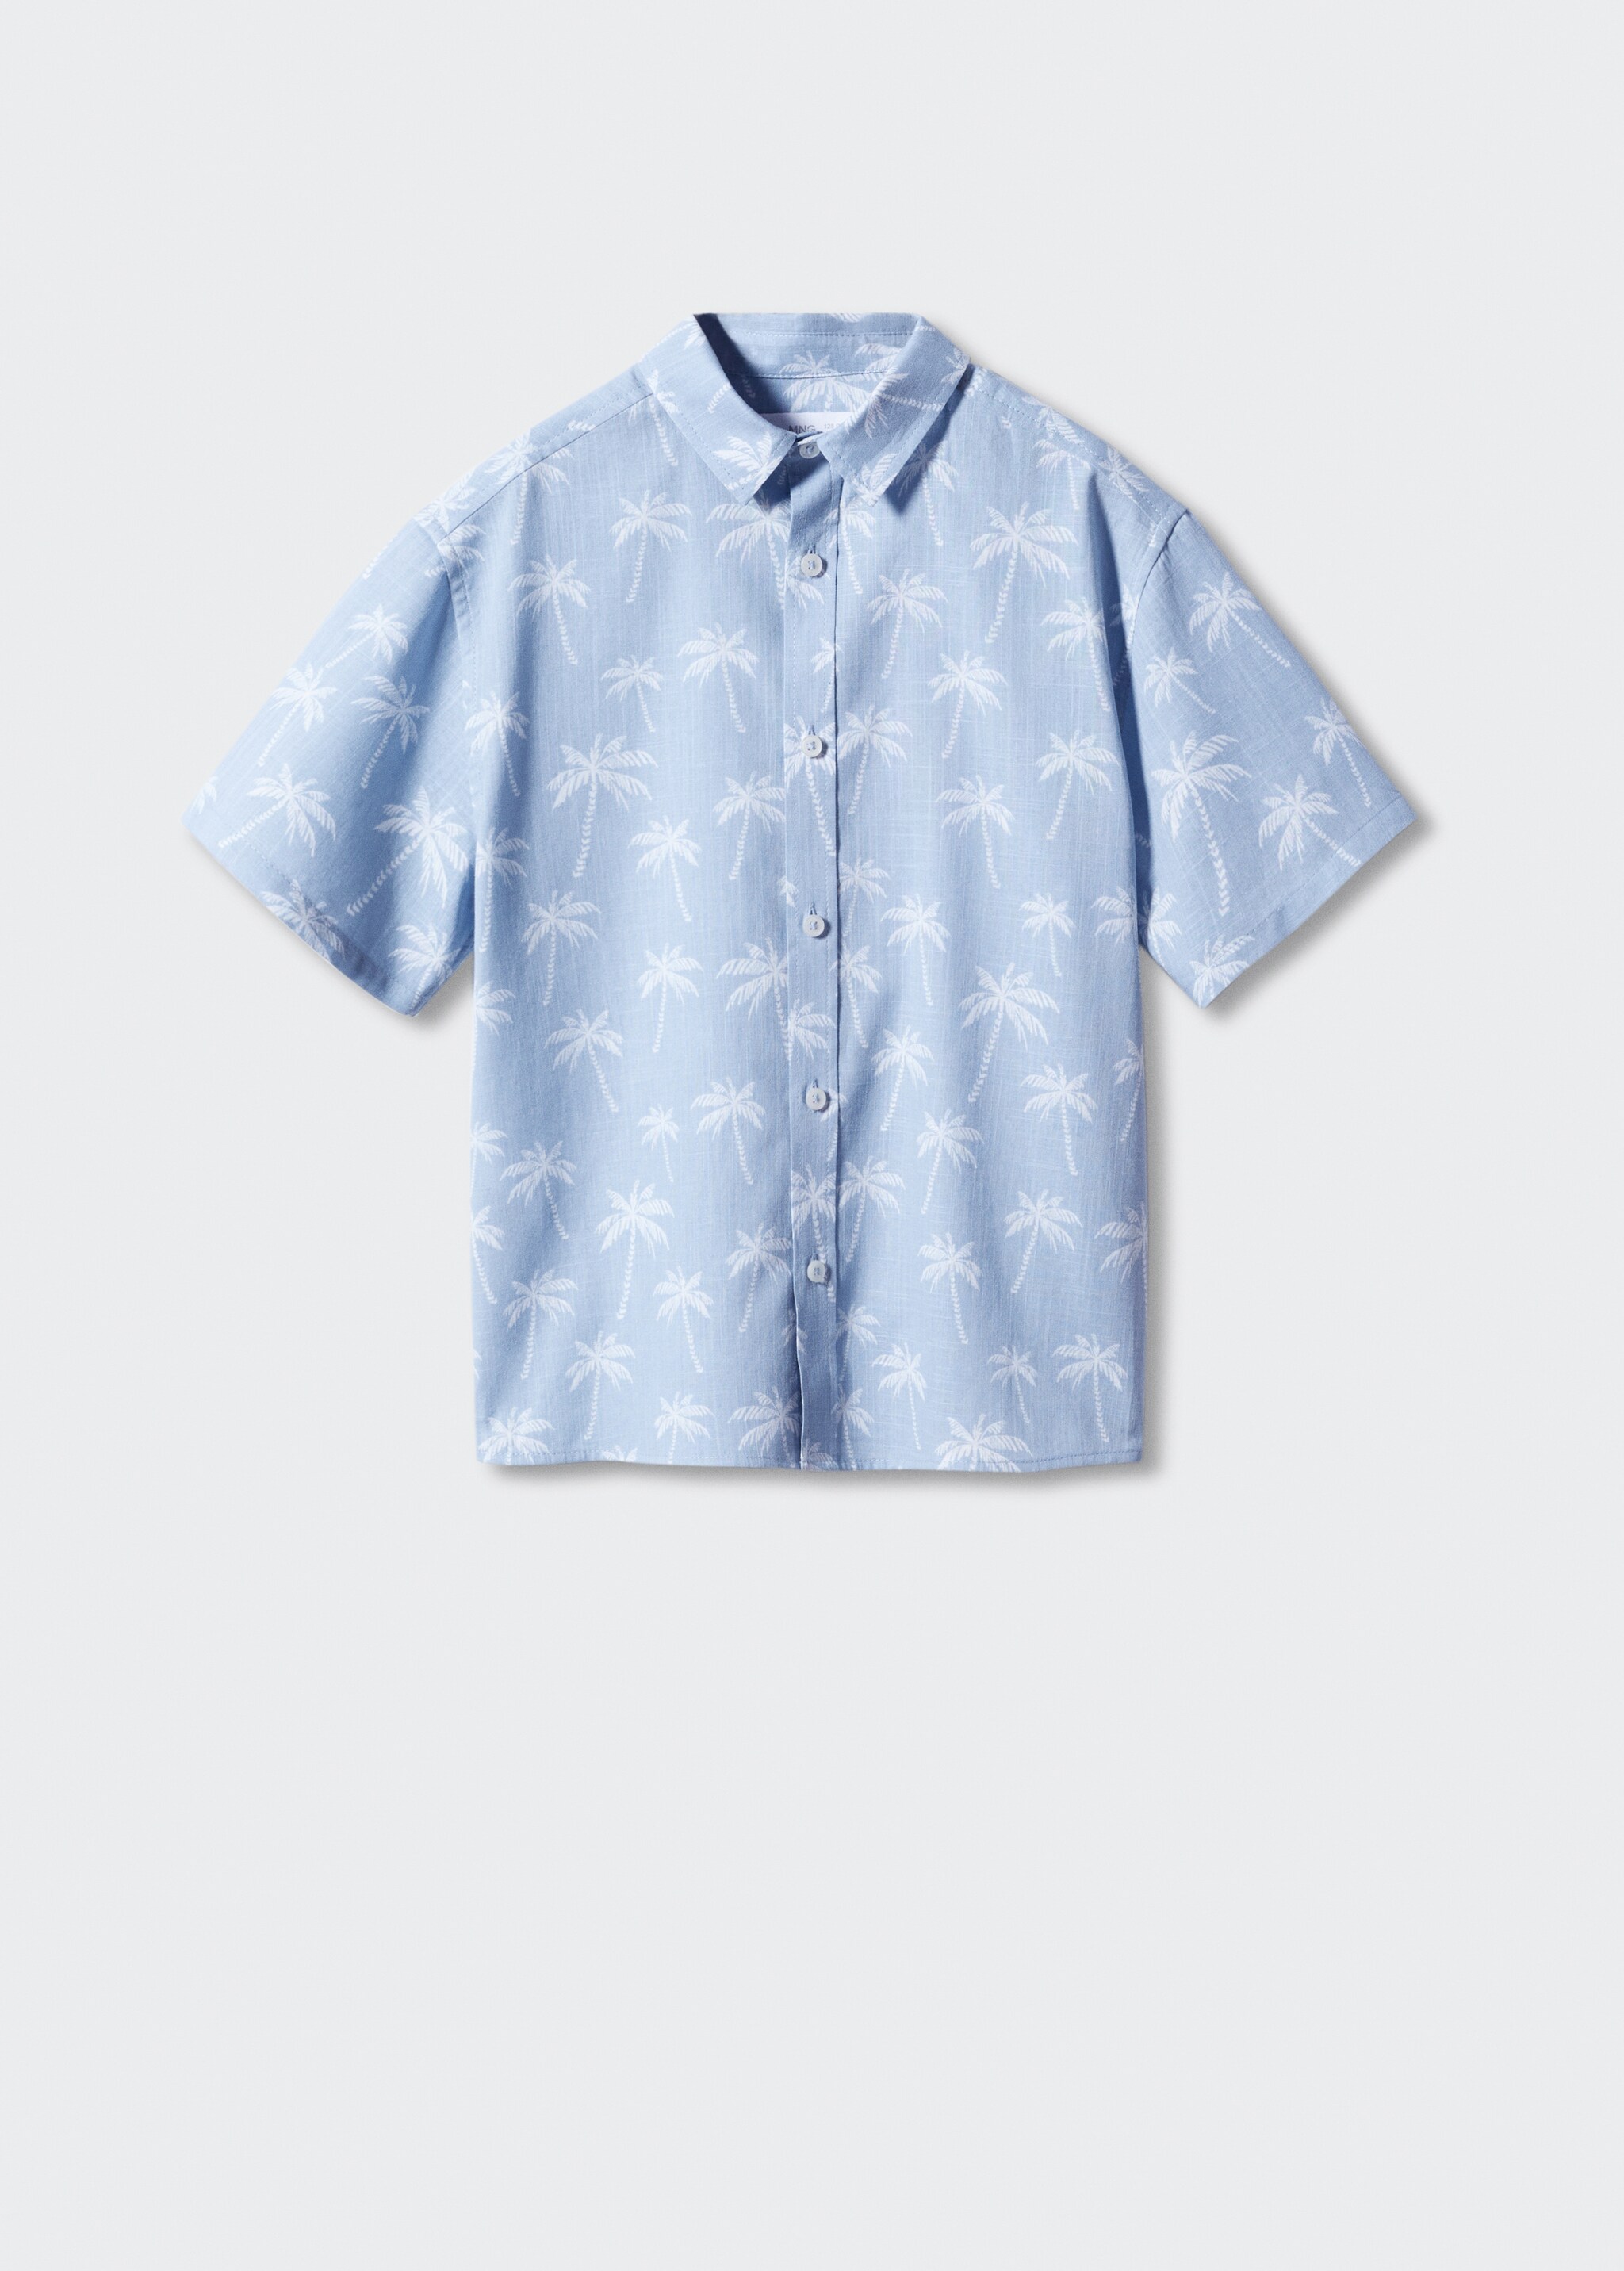 Hawaiian printed shirt - Article without model